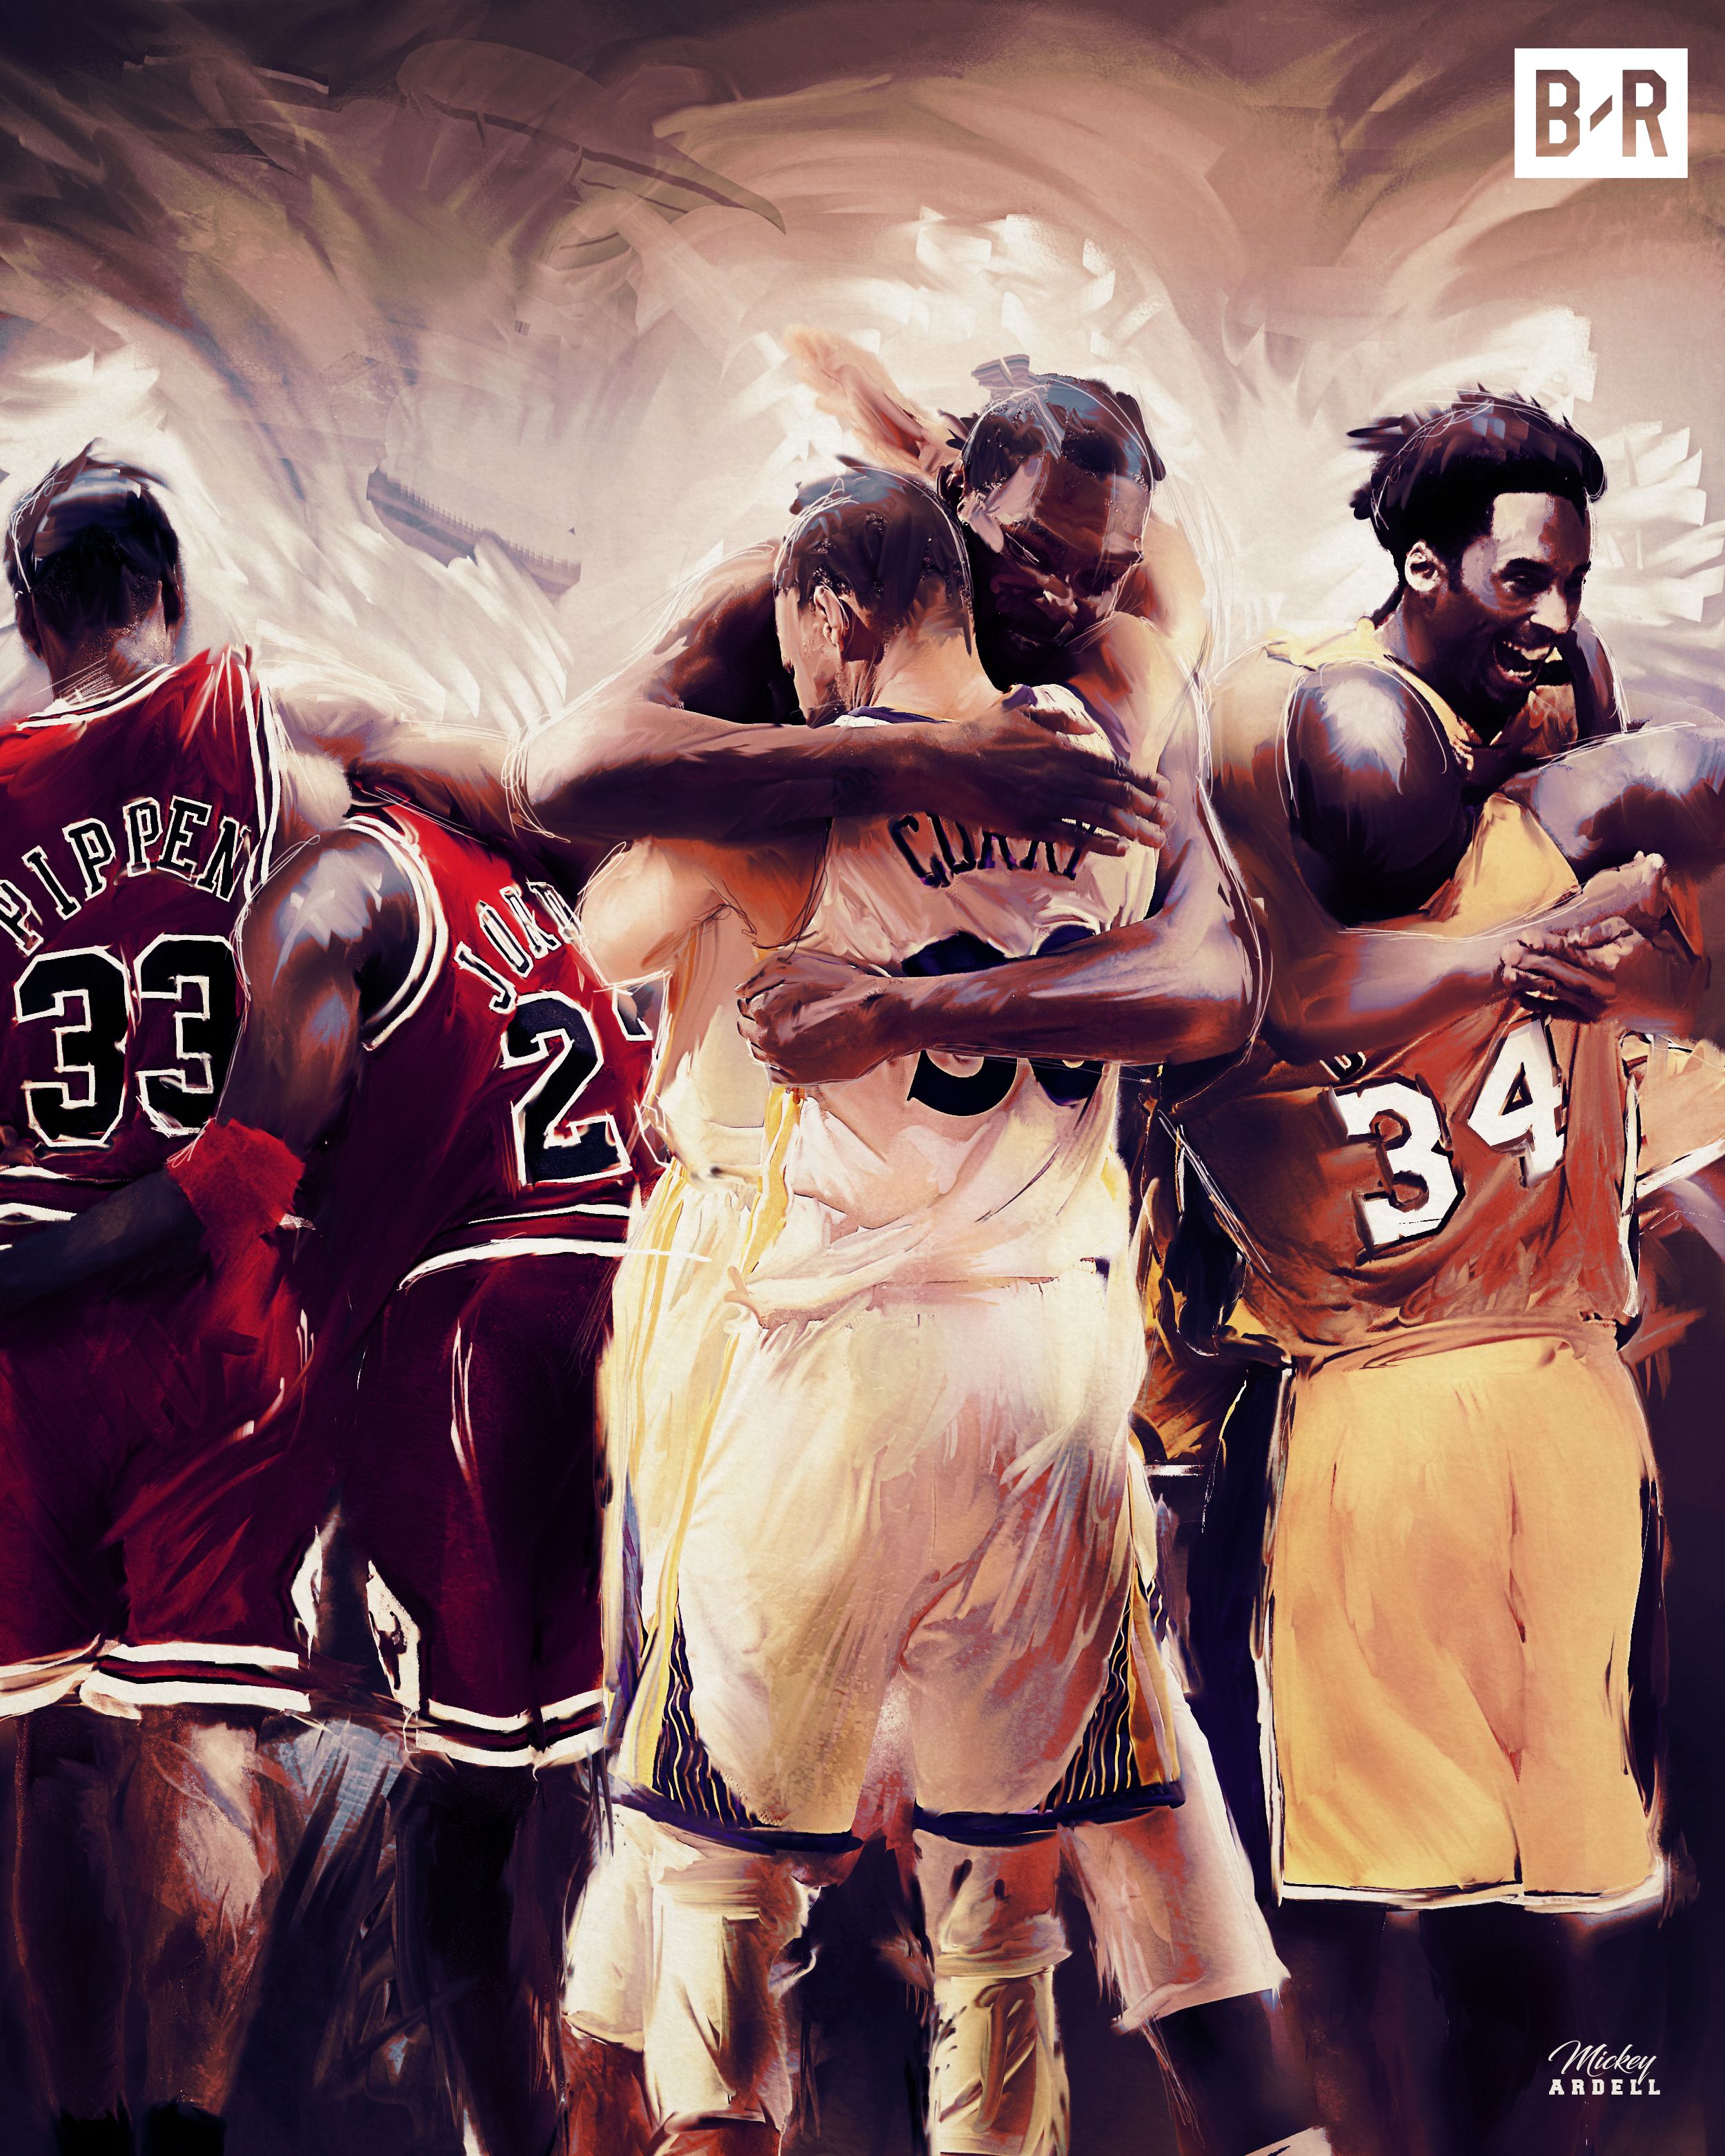 Durant Curry Shaq Kobe Pippen Jordan NBA Art. Nba art, Shaq and kobe, Nba basketball art